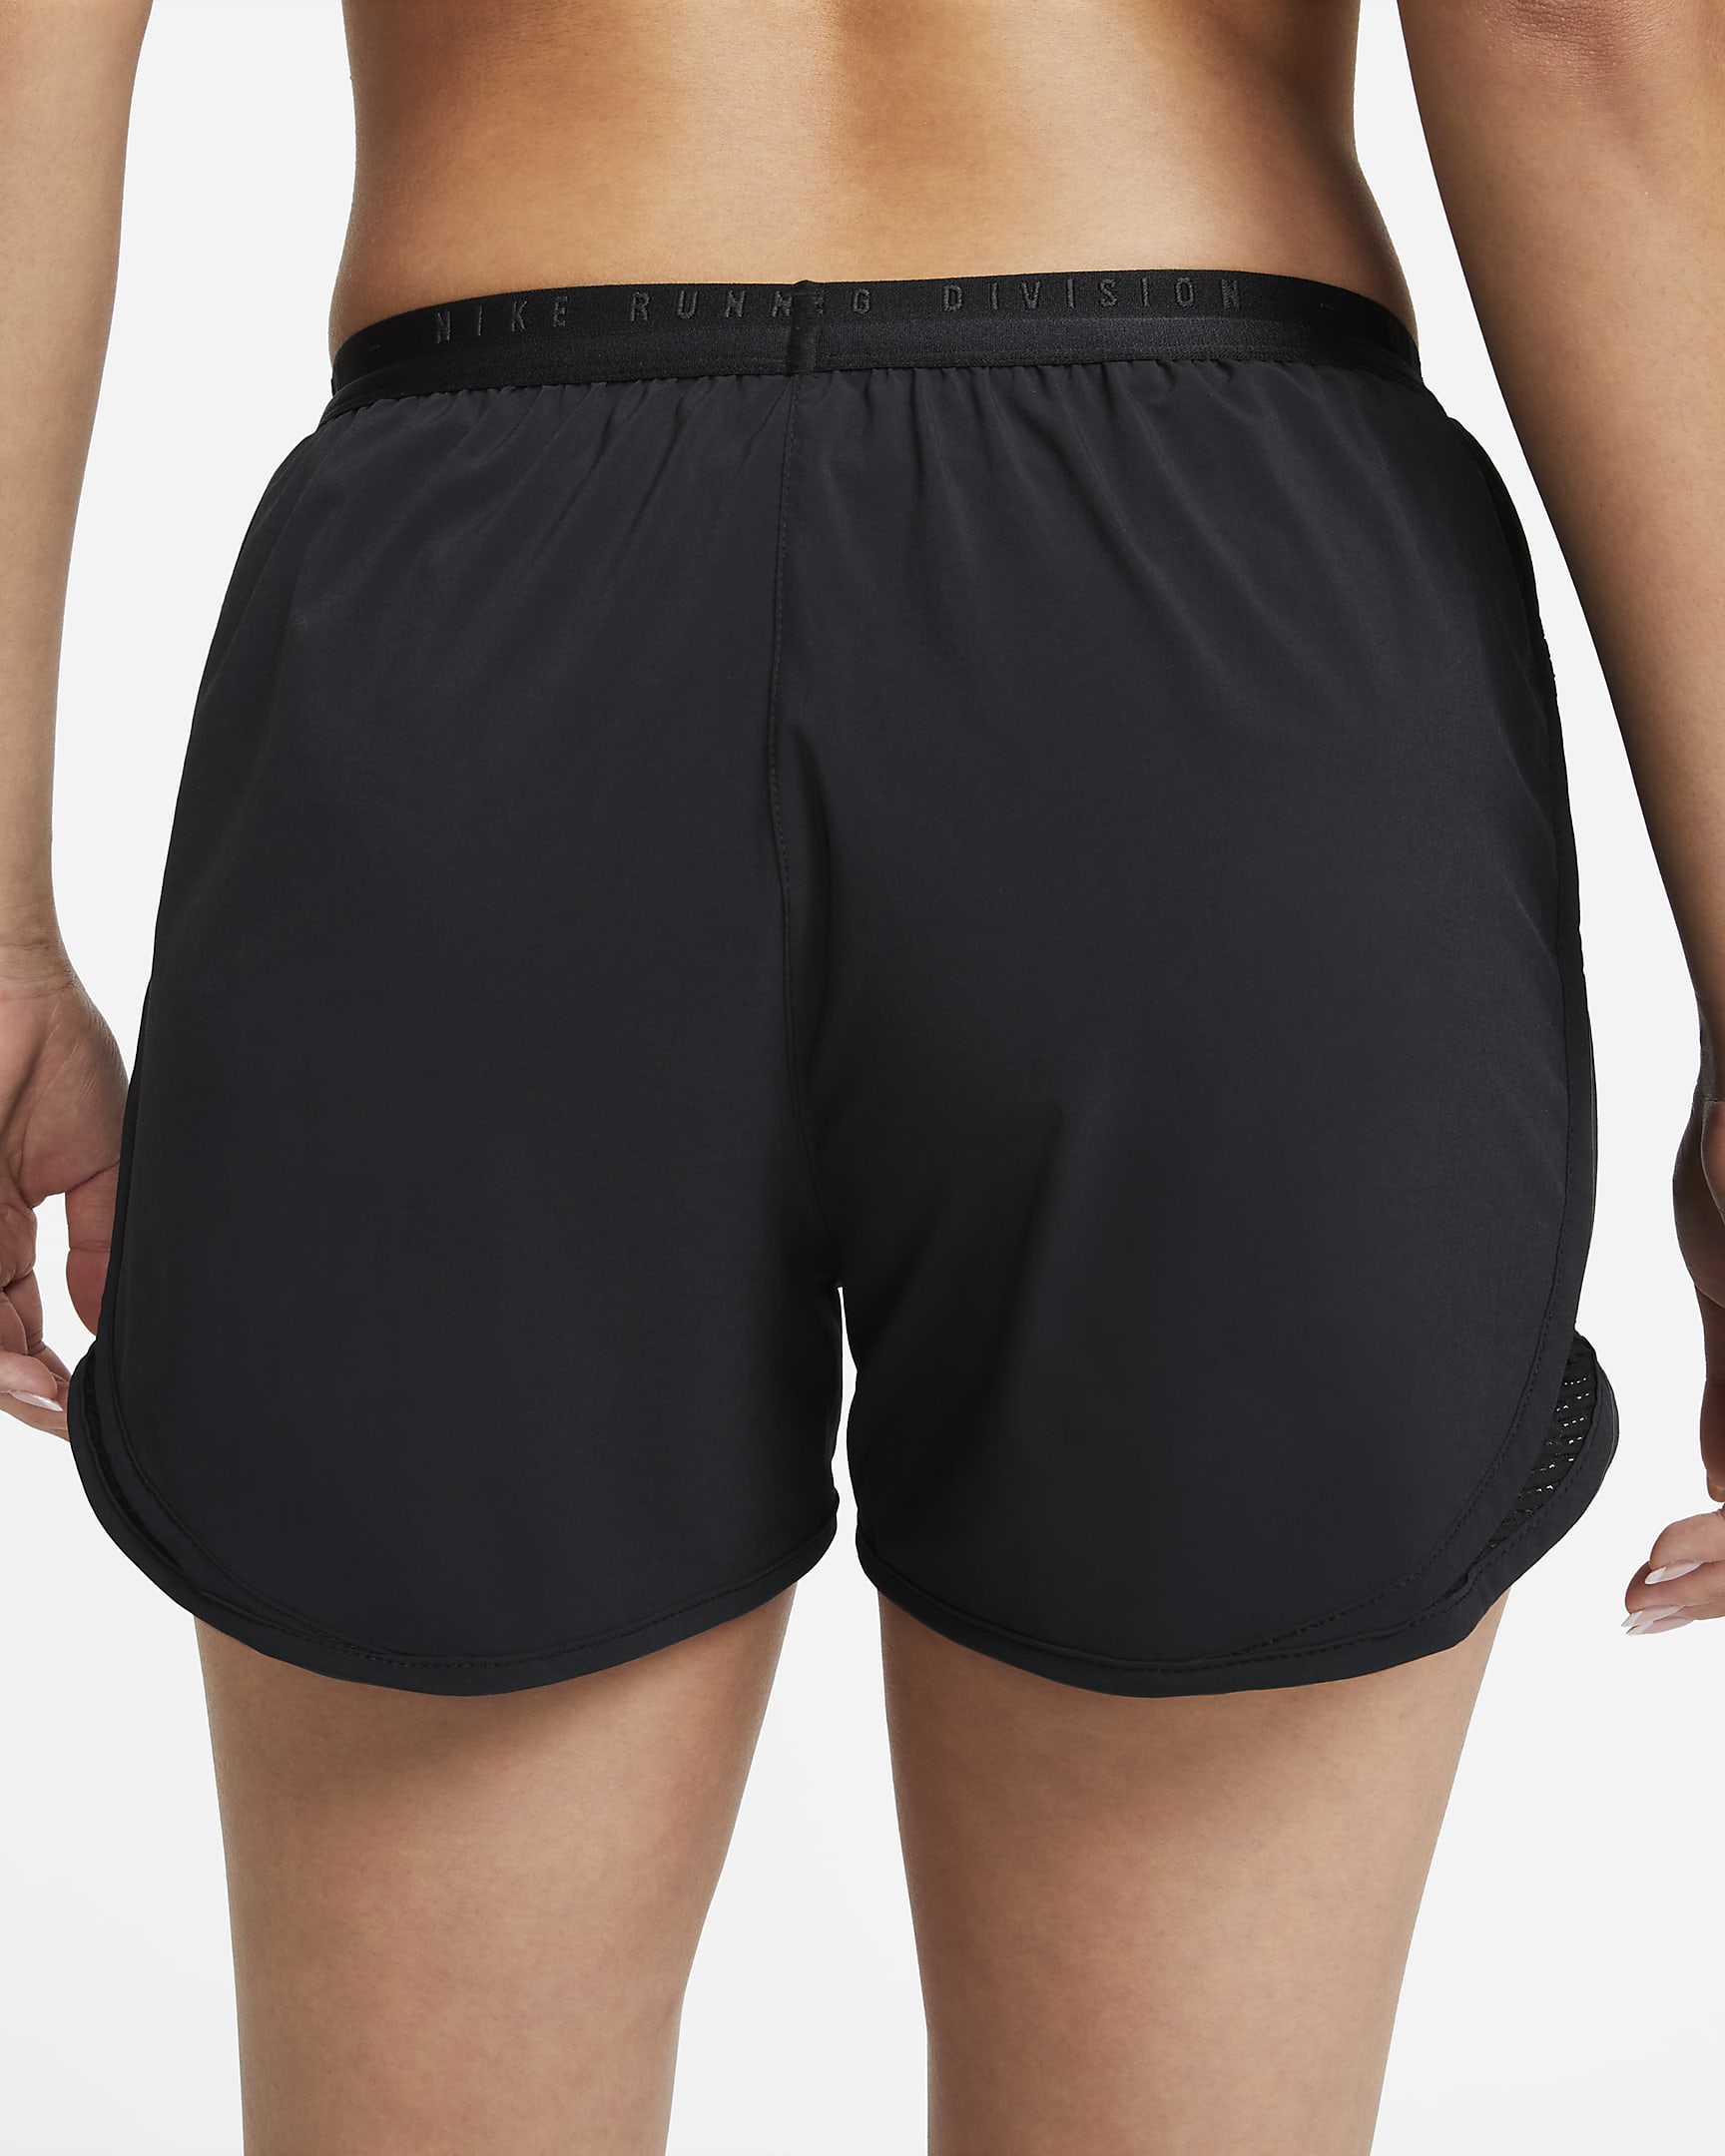 Nike Dri-FIT Run Division Tempo Luxe Women's Running Shorts - Black/Black